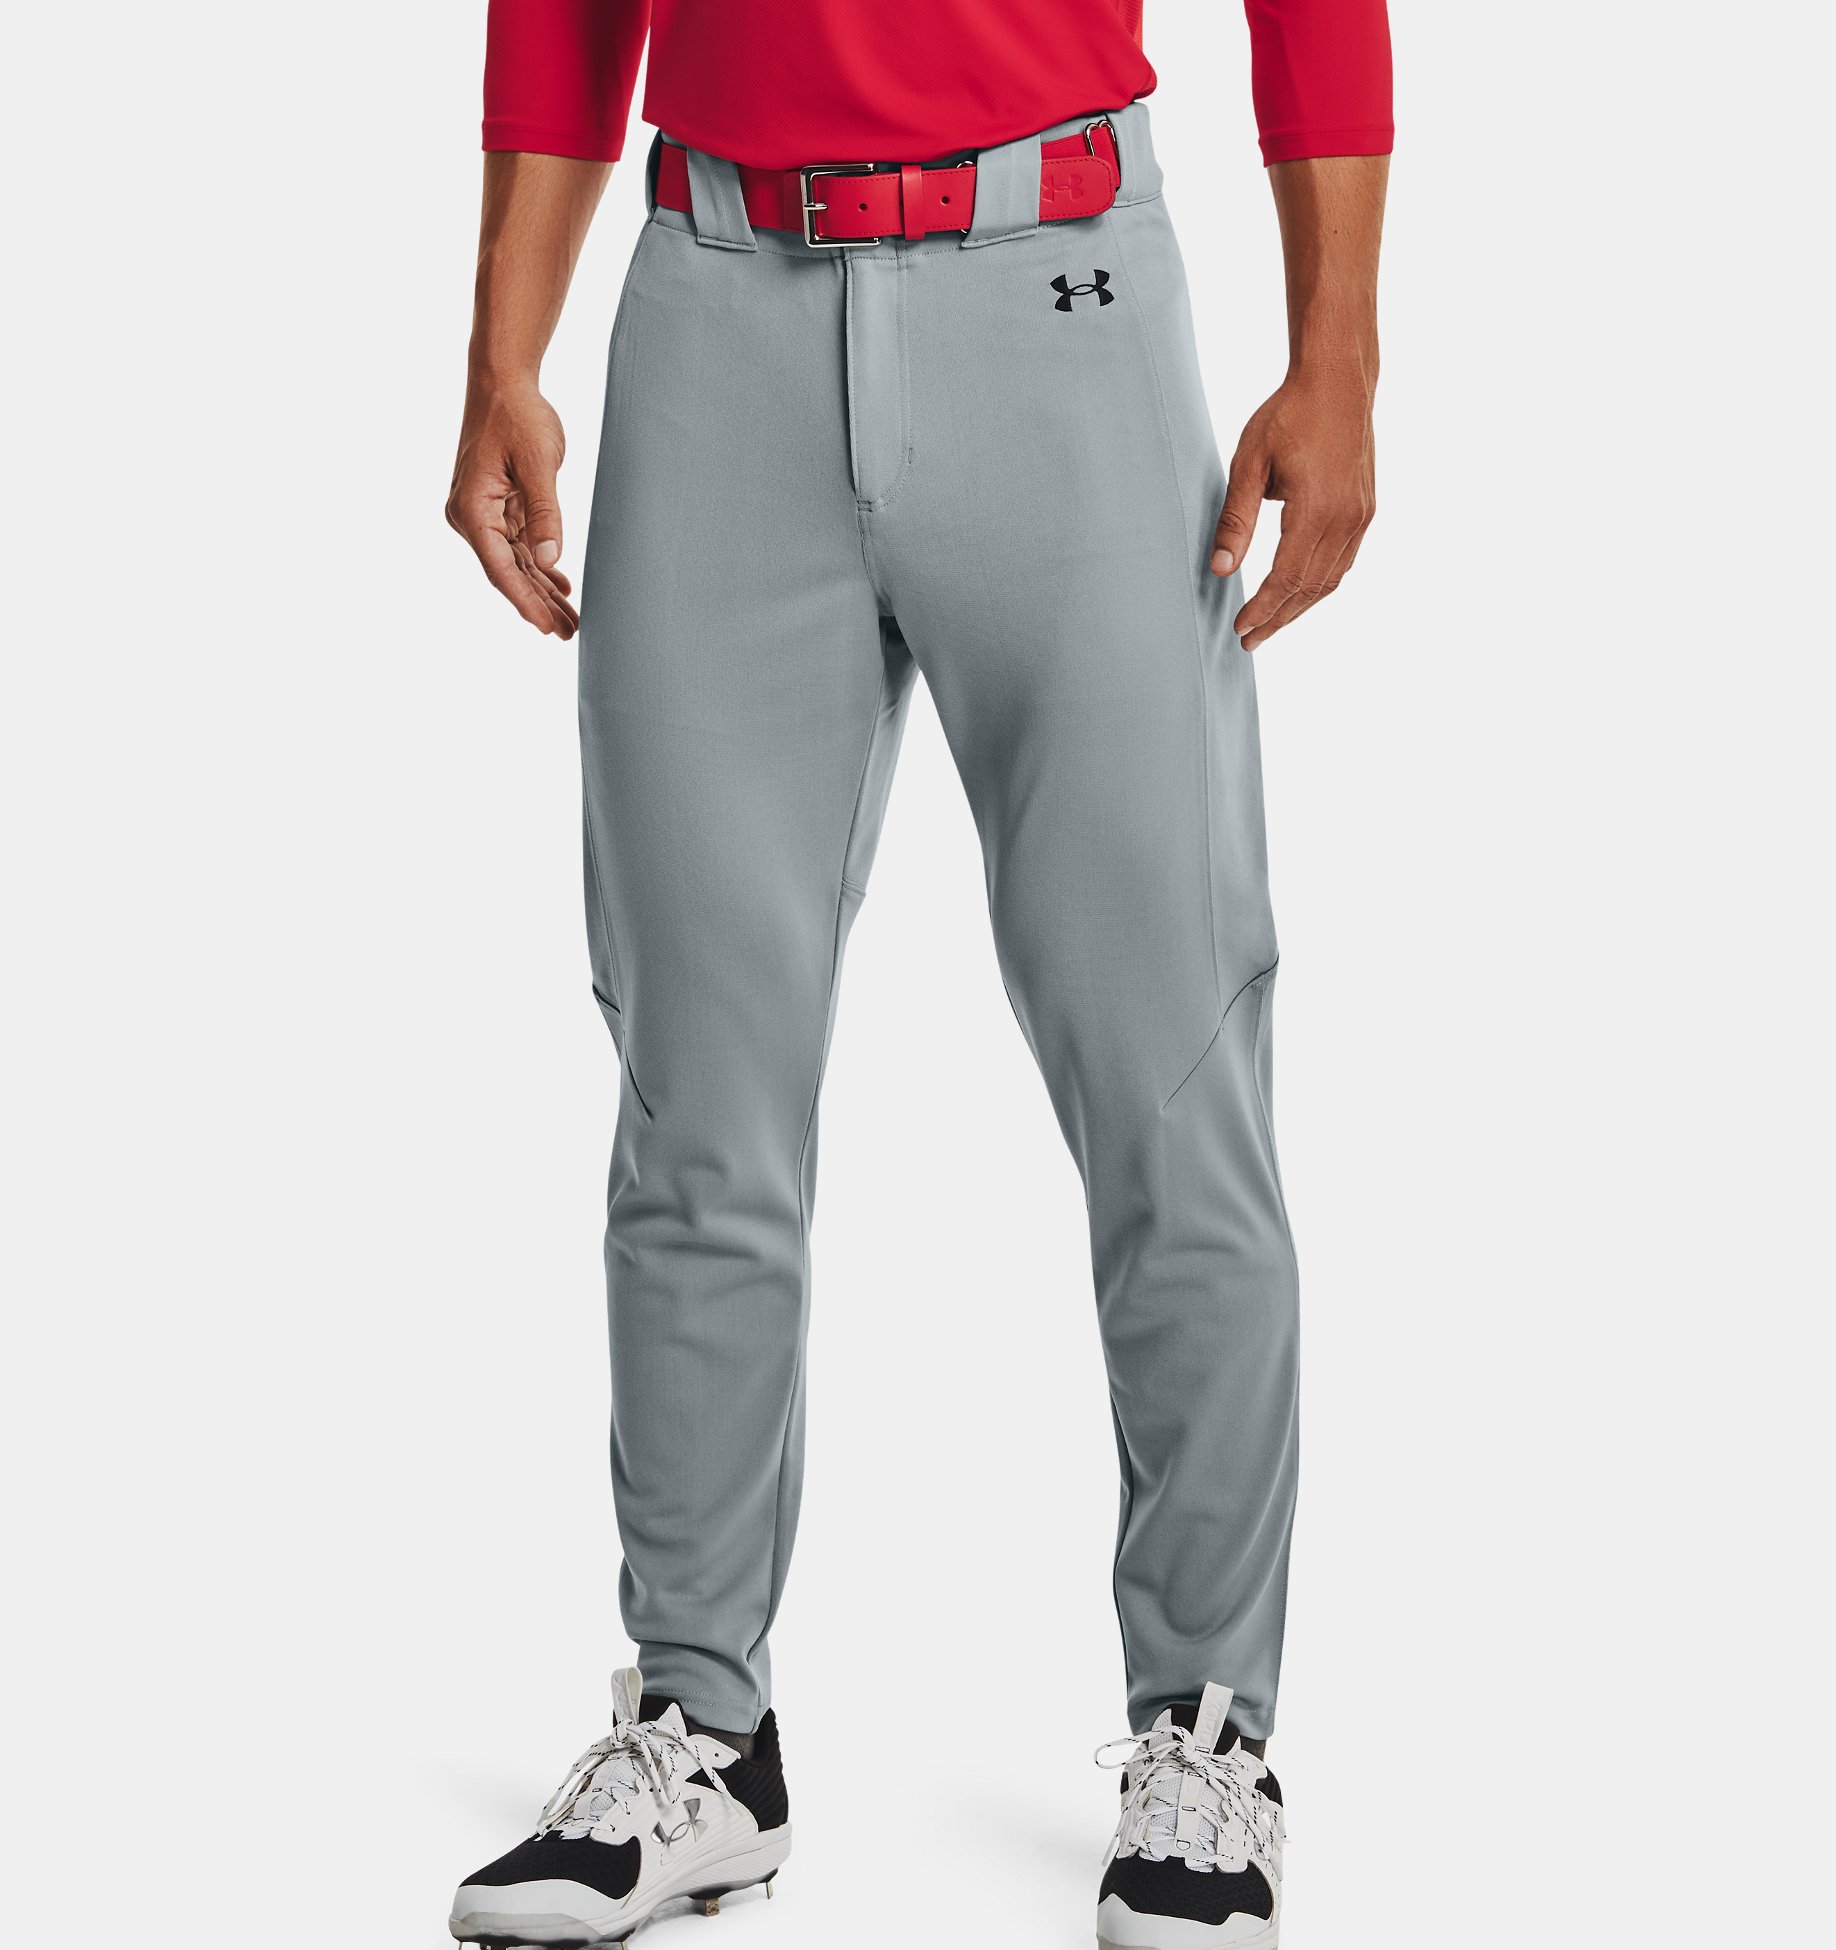 Men's Under Armour Loose Fit Baseball Pants Grey/ Black Stripe SZ Medium 